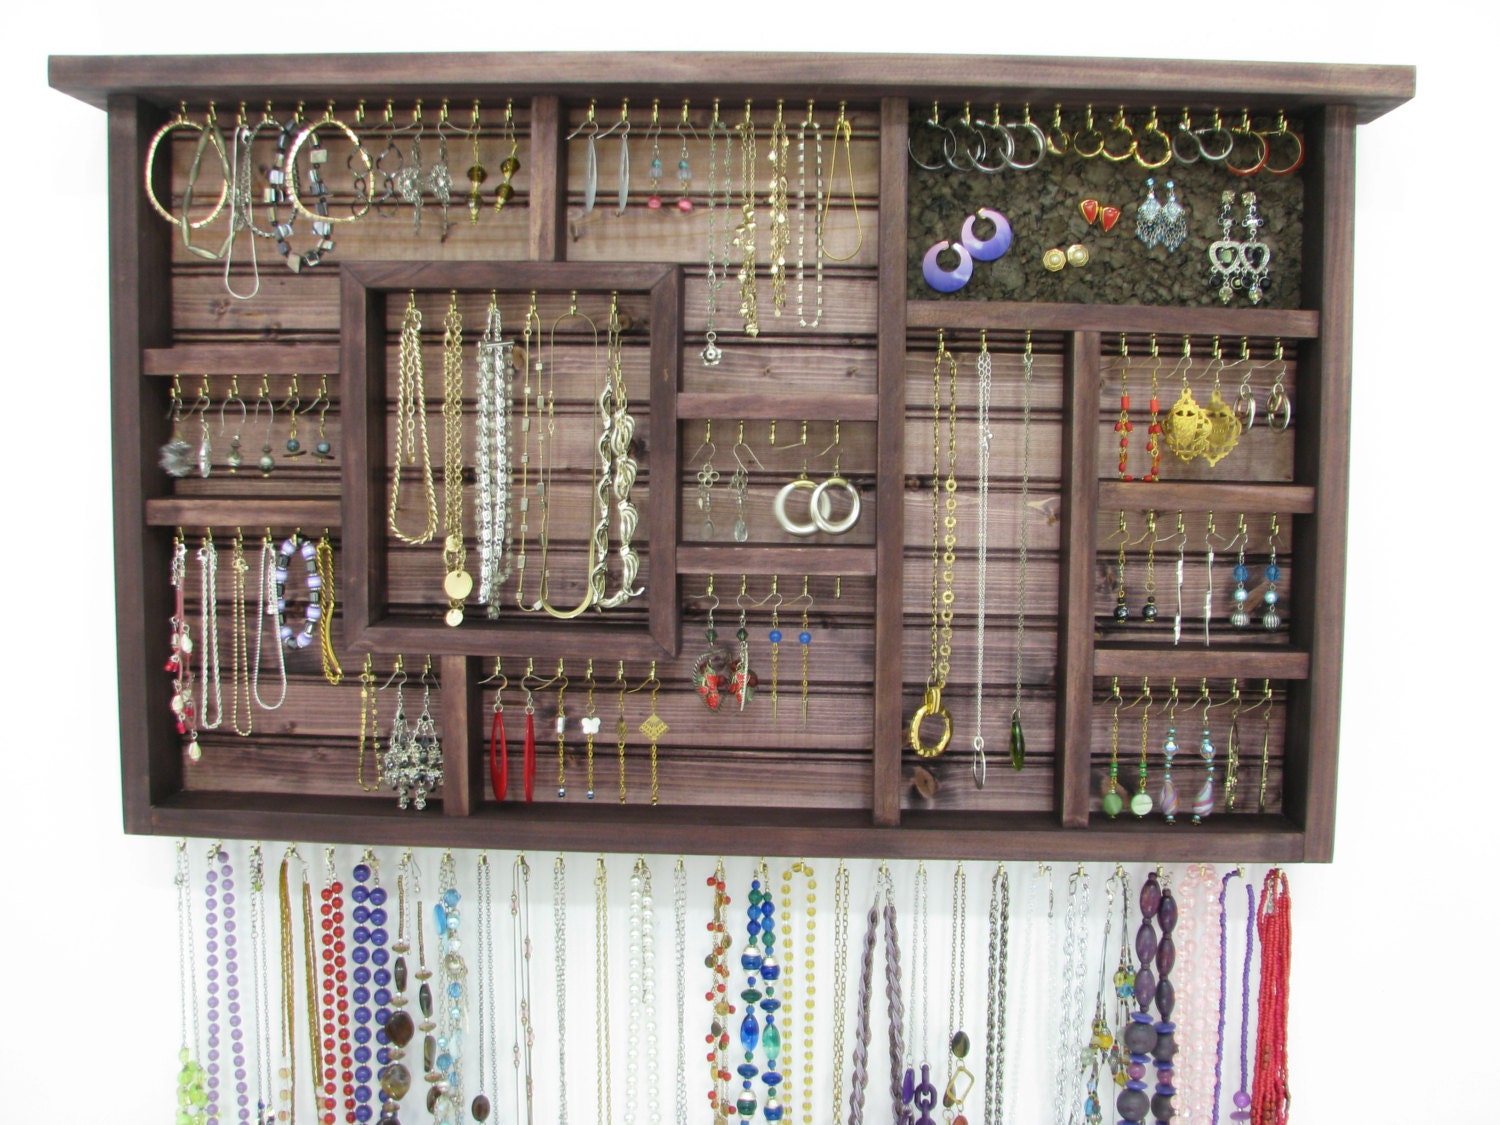 Hanging jewelry display